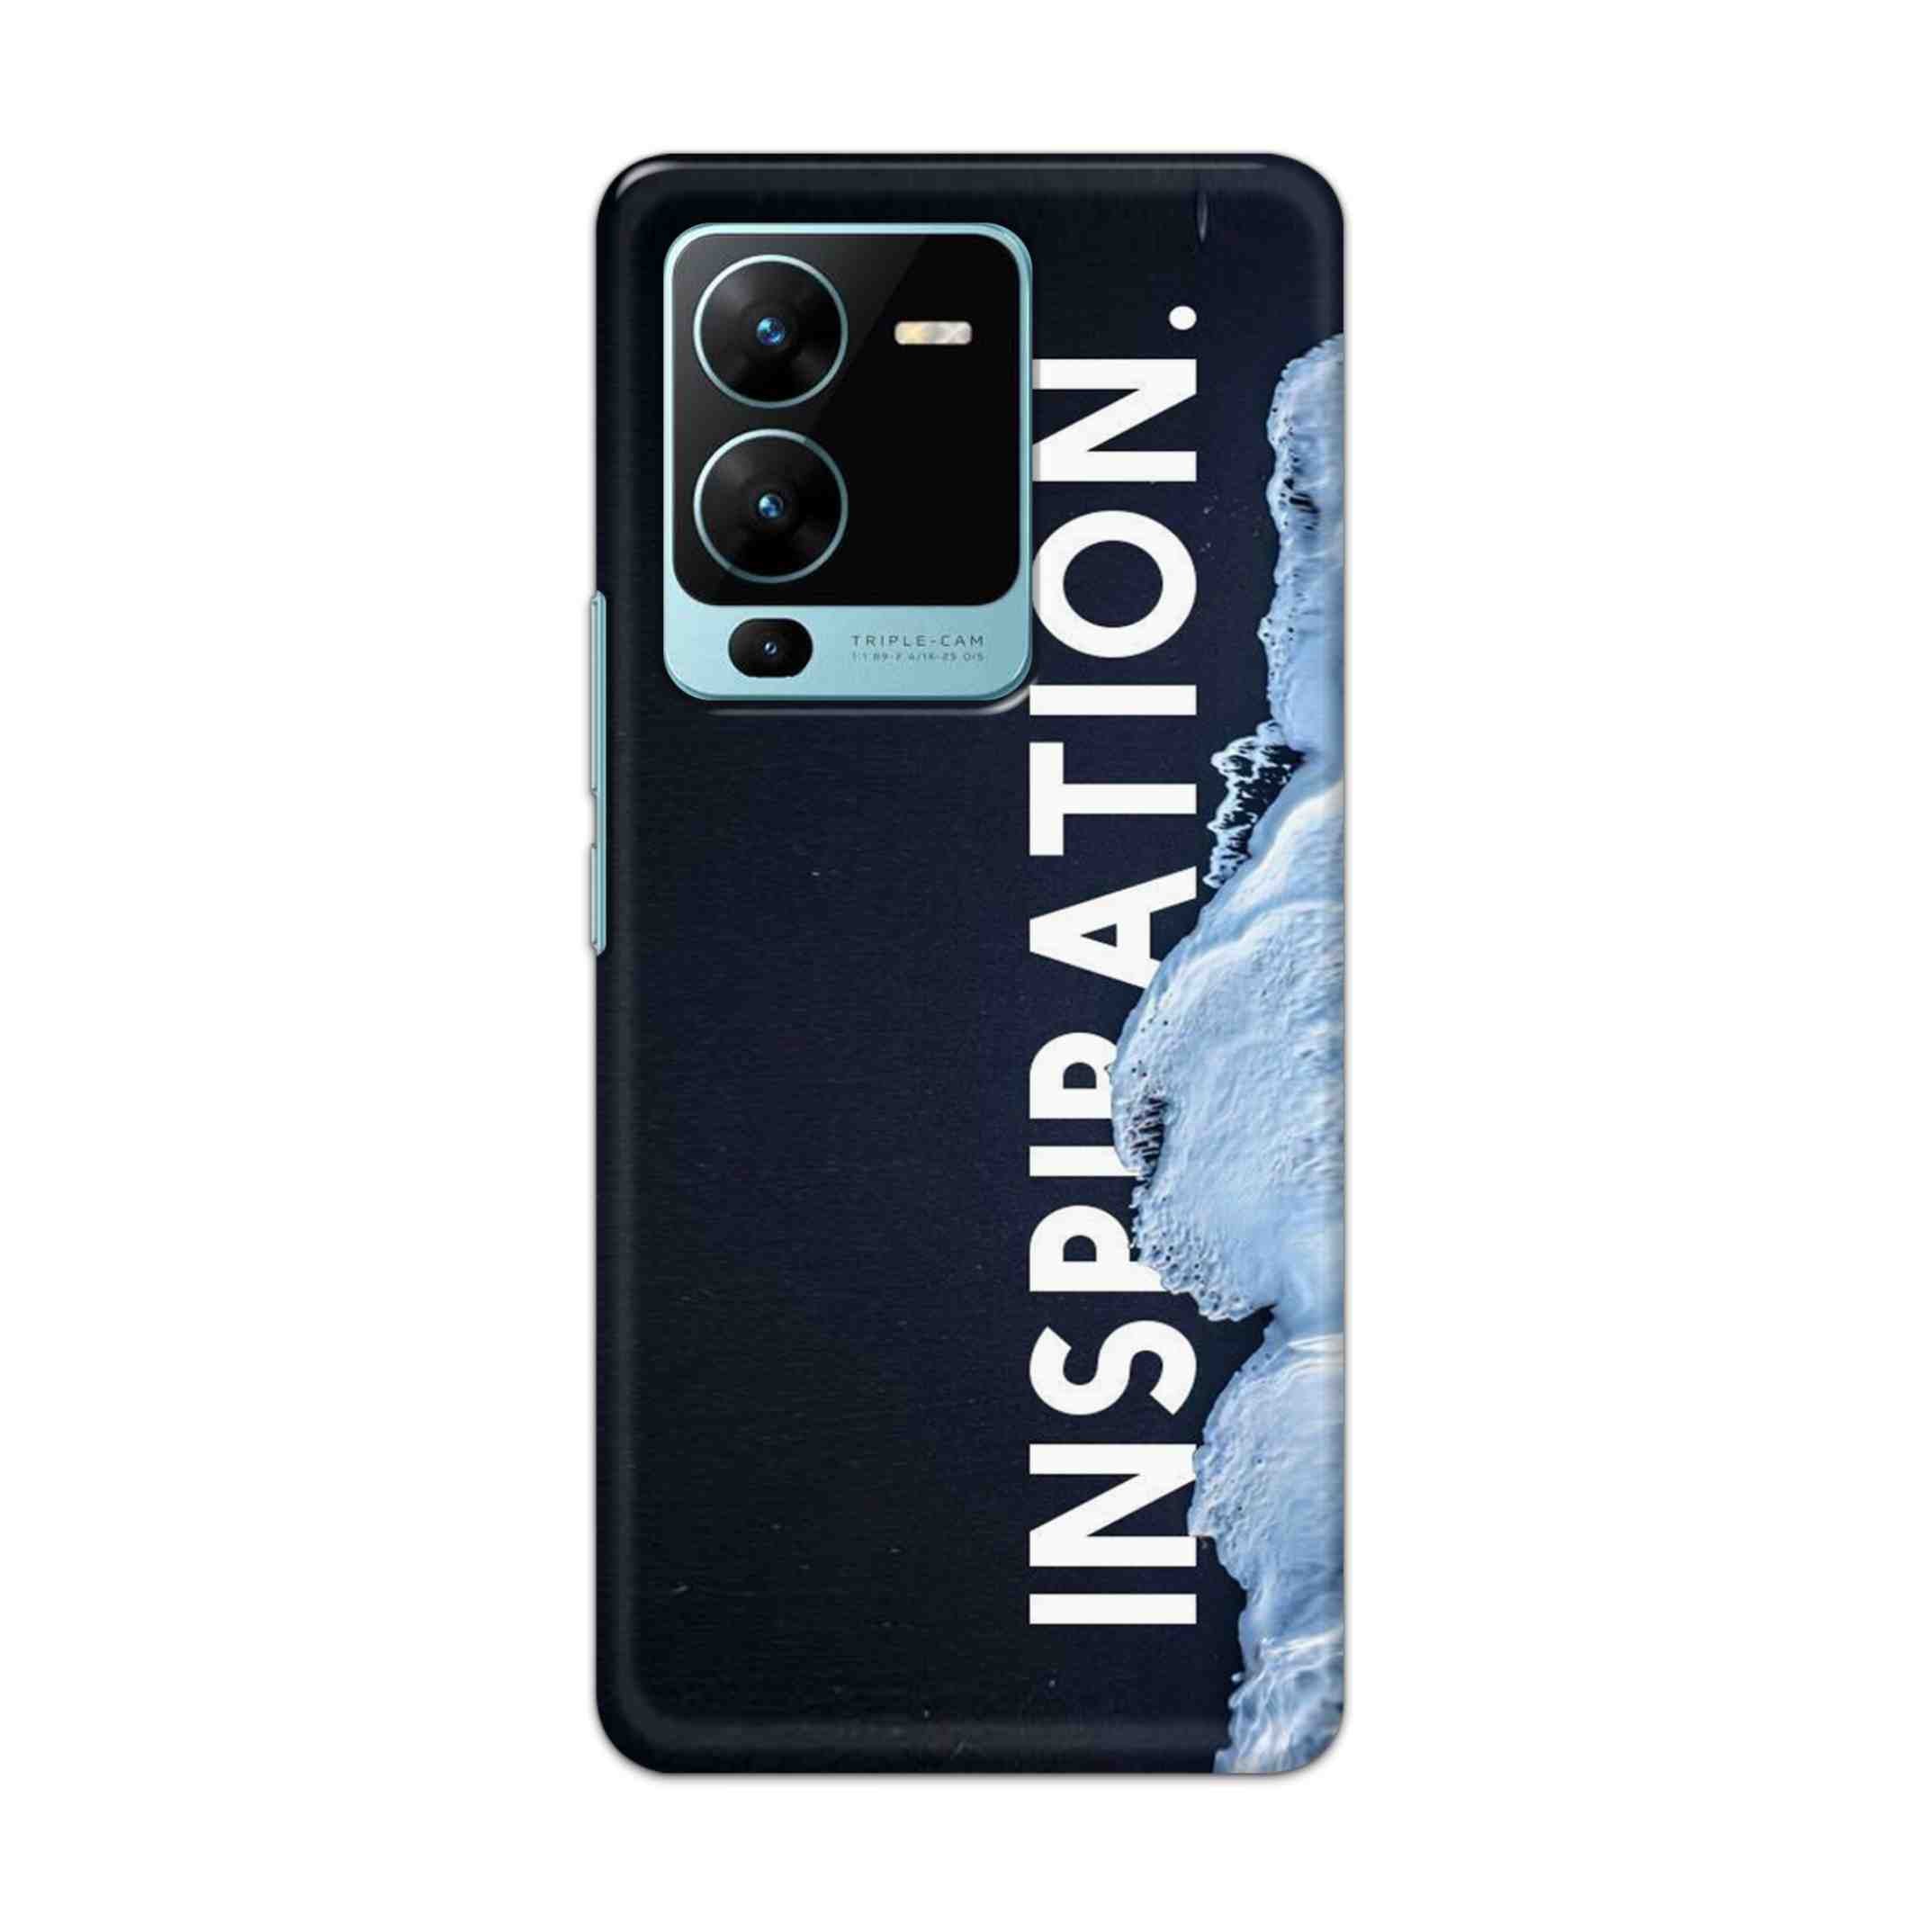 Buy Inspiration Hard Back Mobile Phone Case Cover For Vivo V25 Pro Online